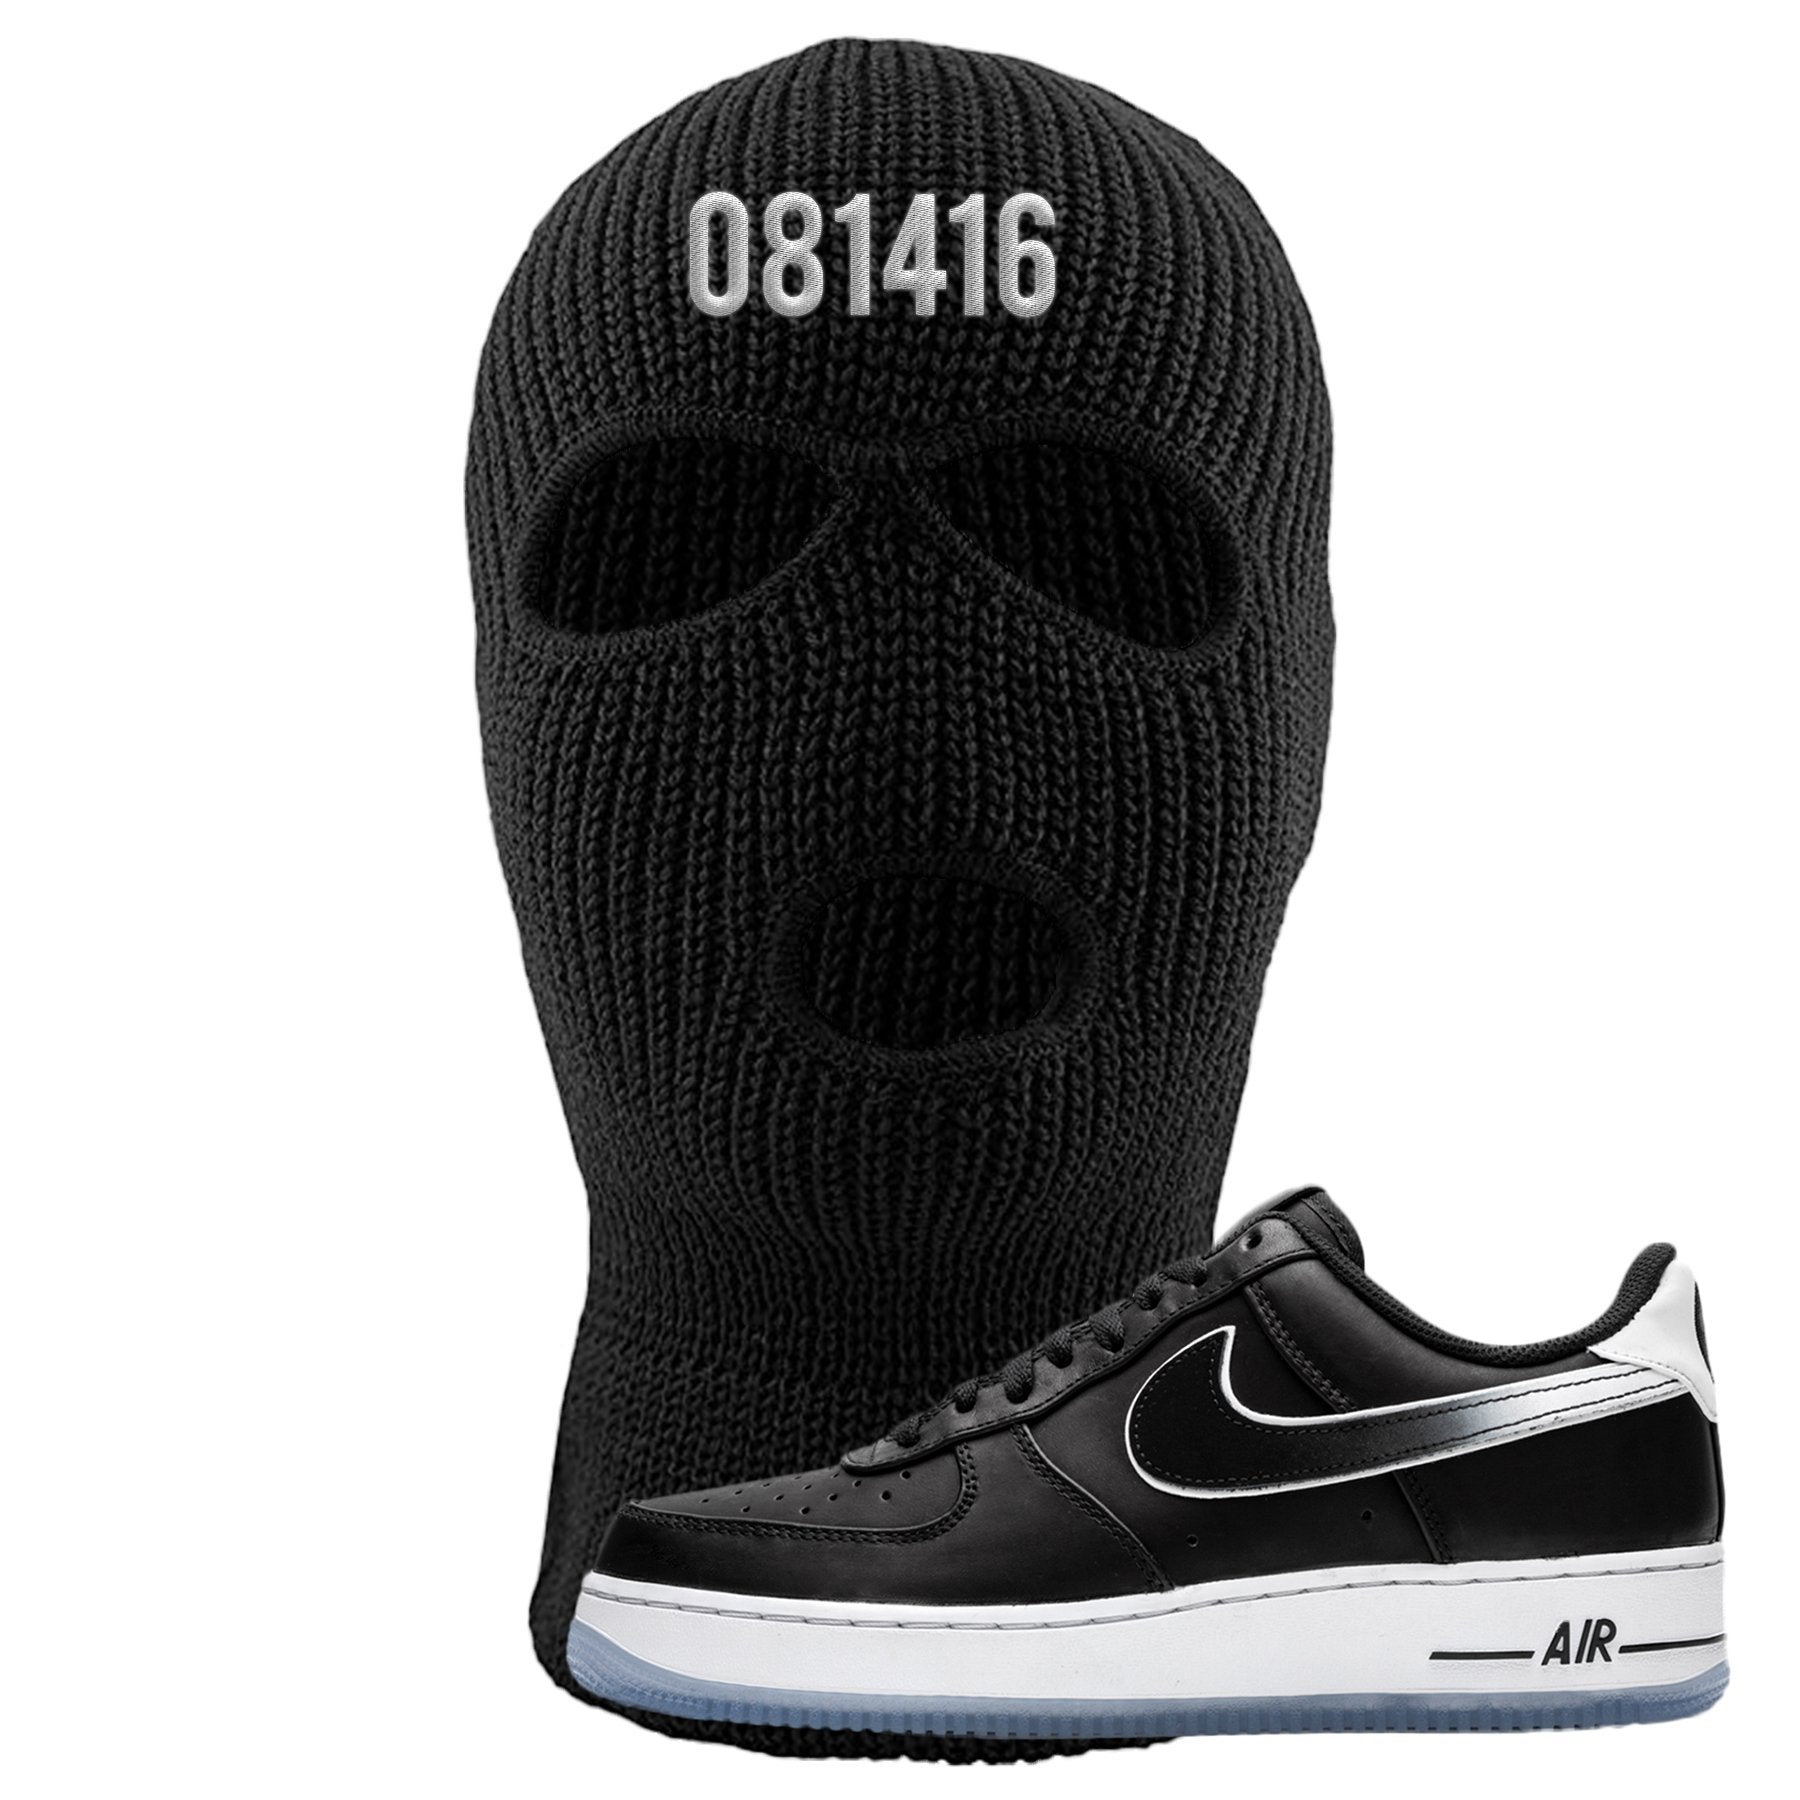 Colin Kaepernick X Air Force 1 Low 081416 Black Sneaker Hook Up Ski Mask